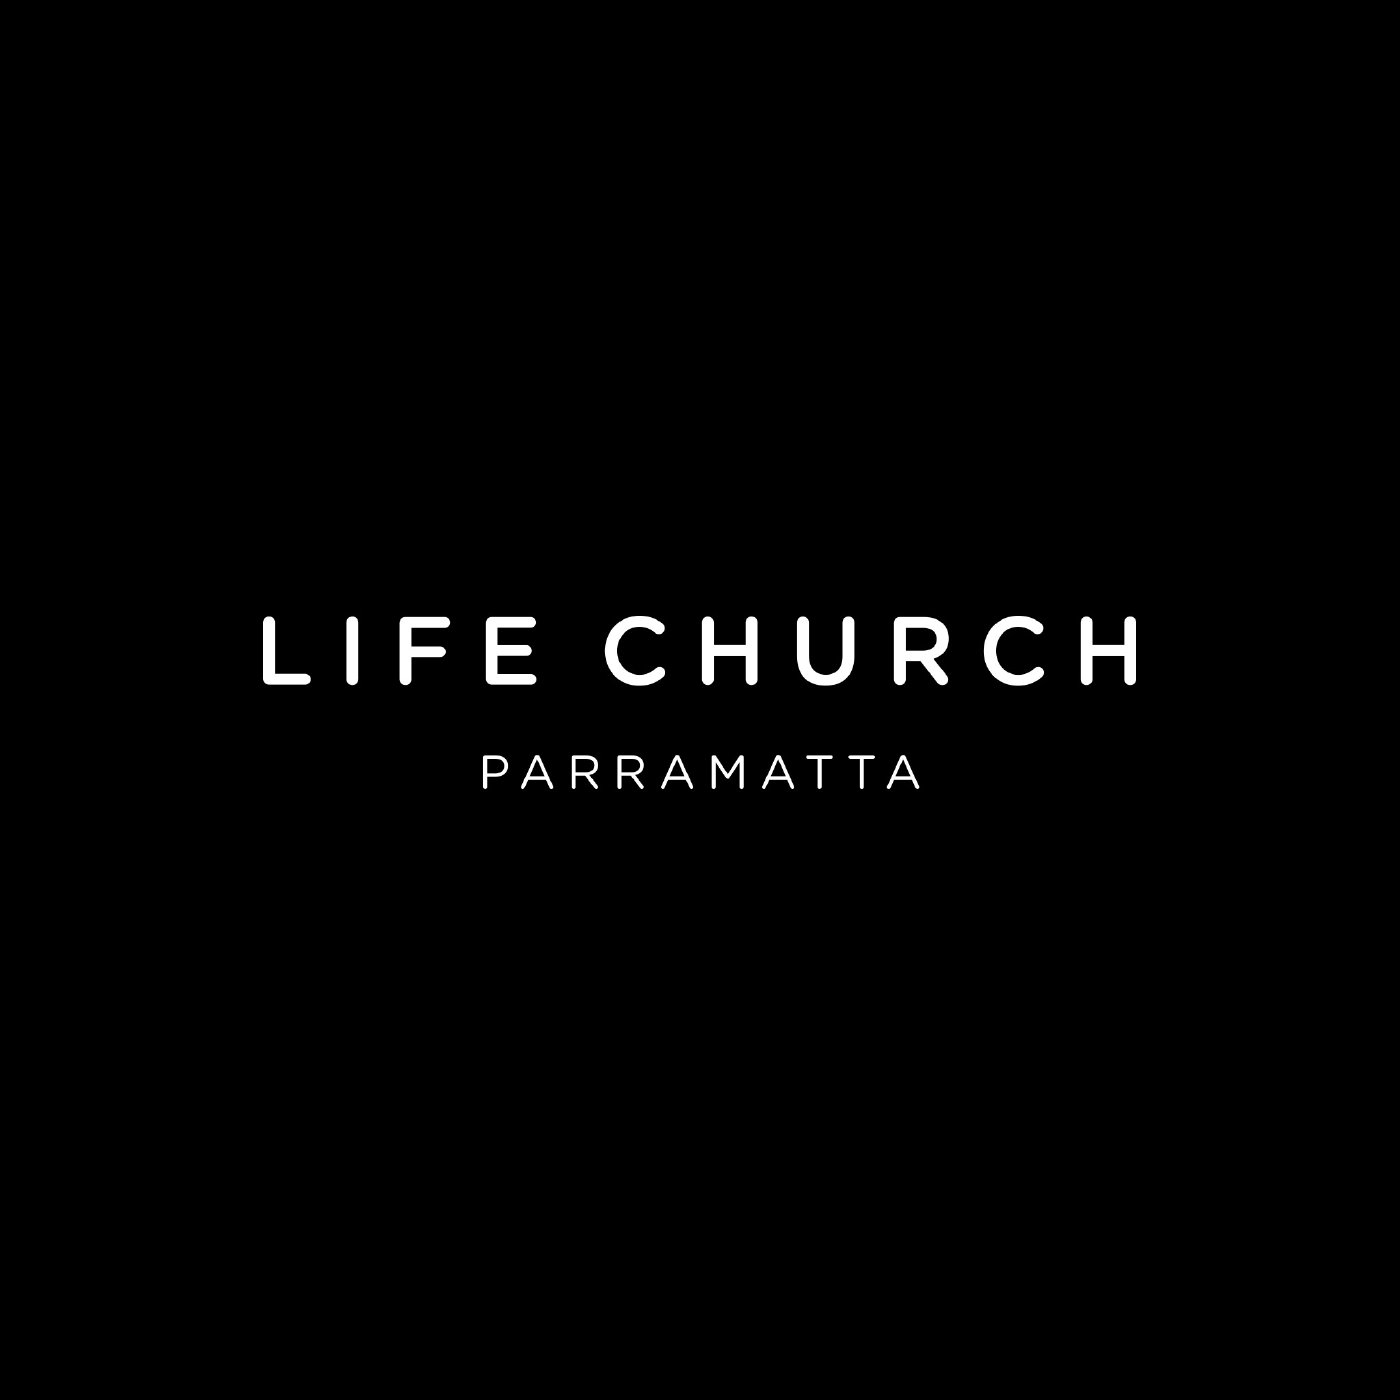 Life Church Parramatta